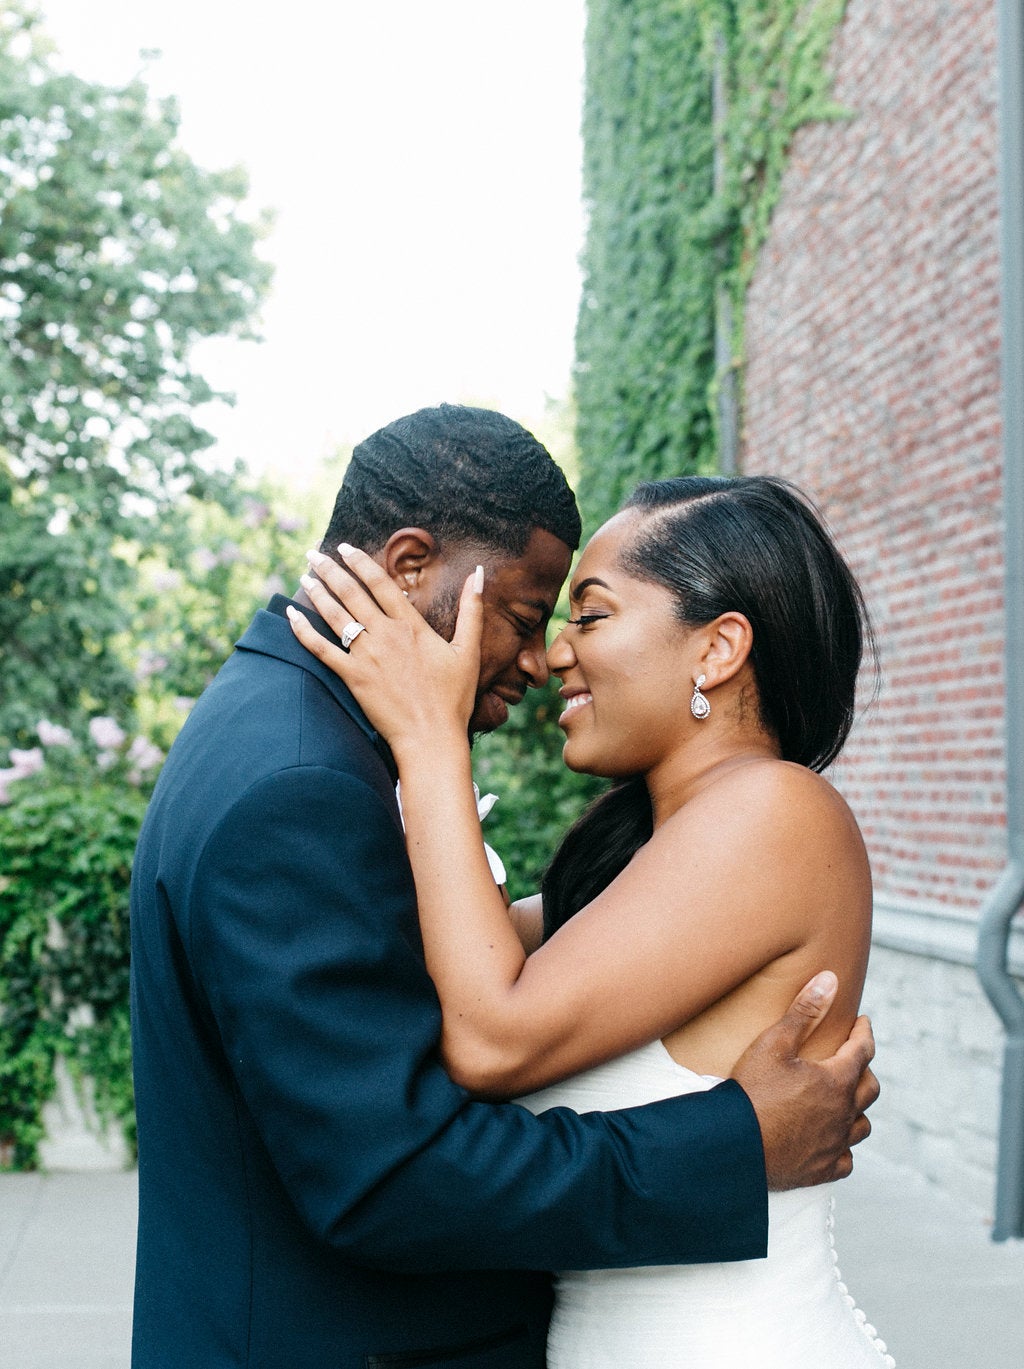 Bridal Bliss: Chris and Kierra's Dallas Wedding Was A Whimsical Dream Come True
